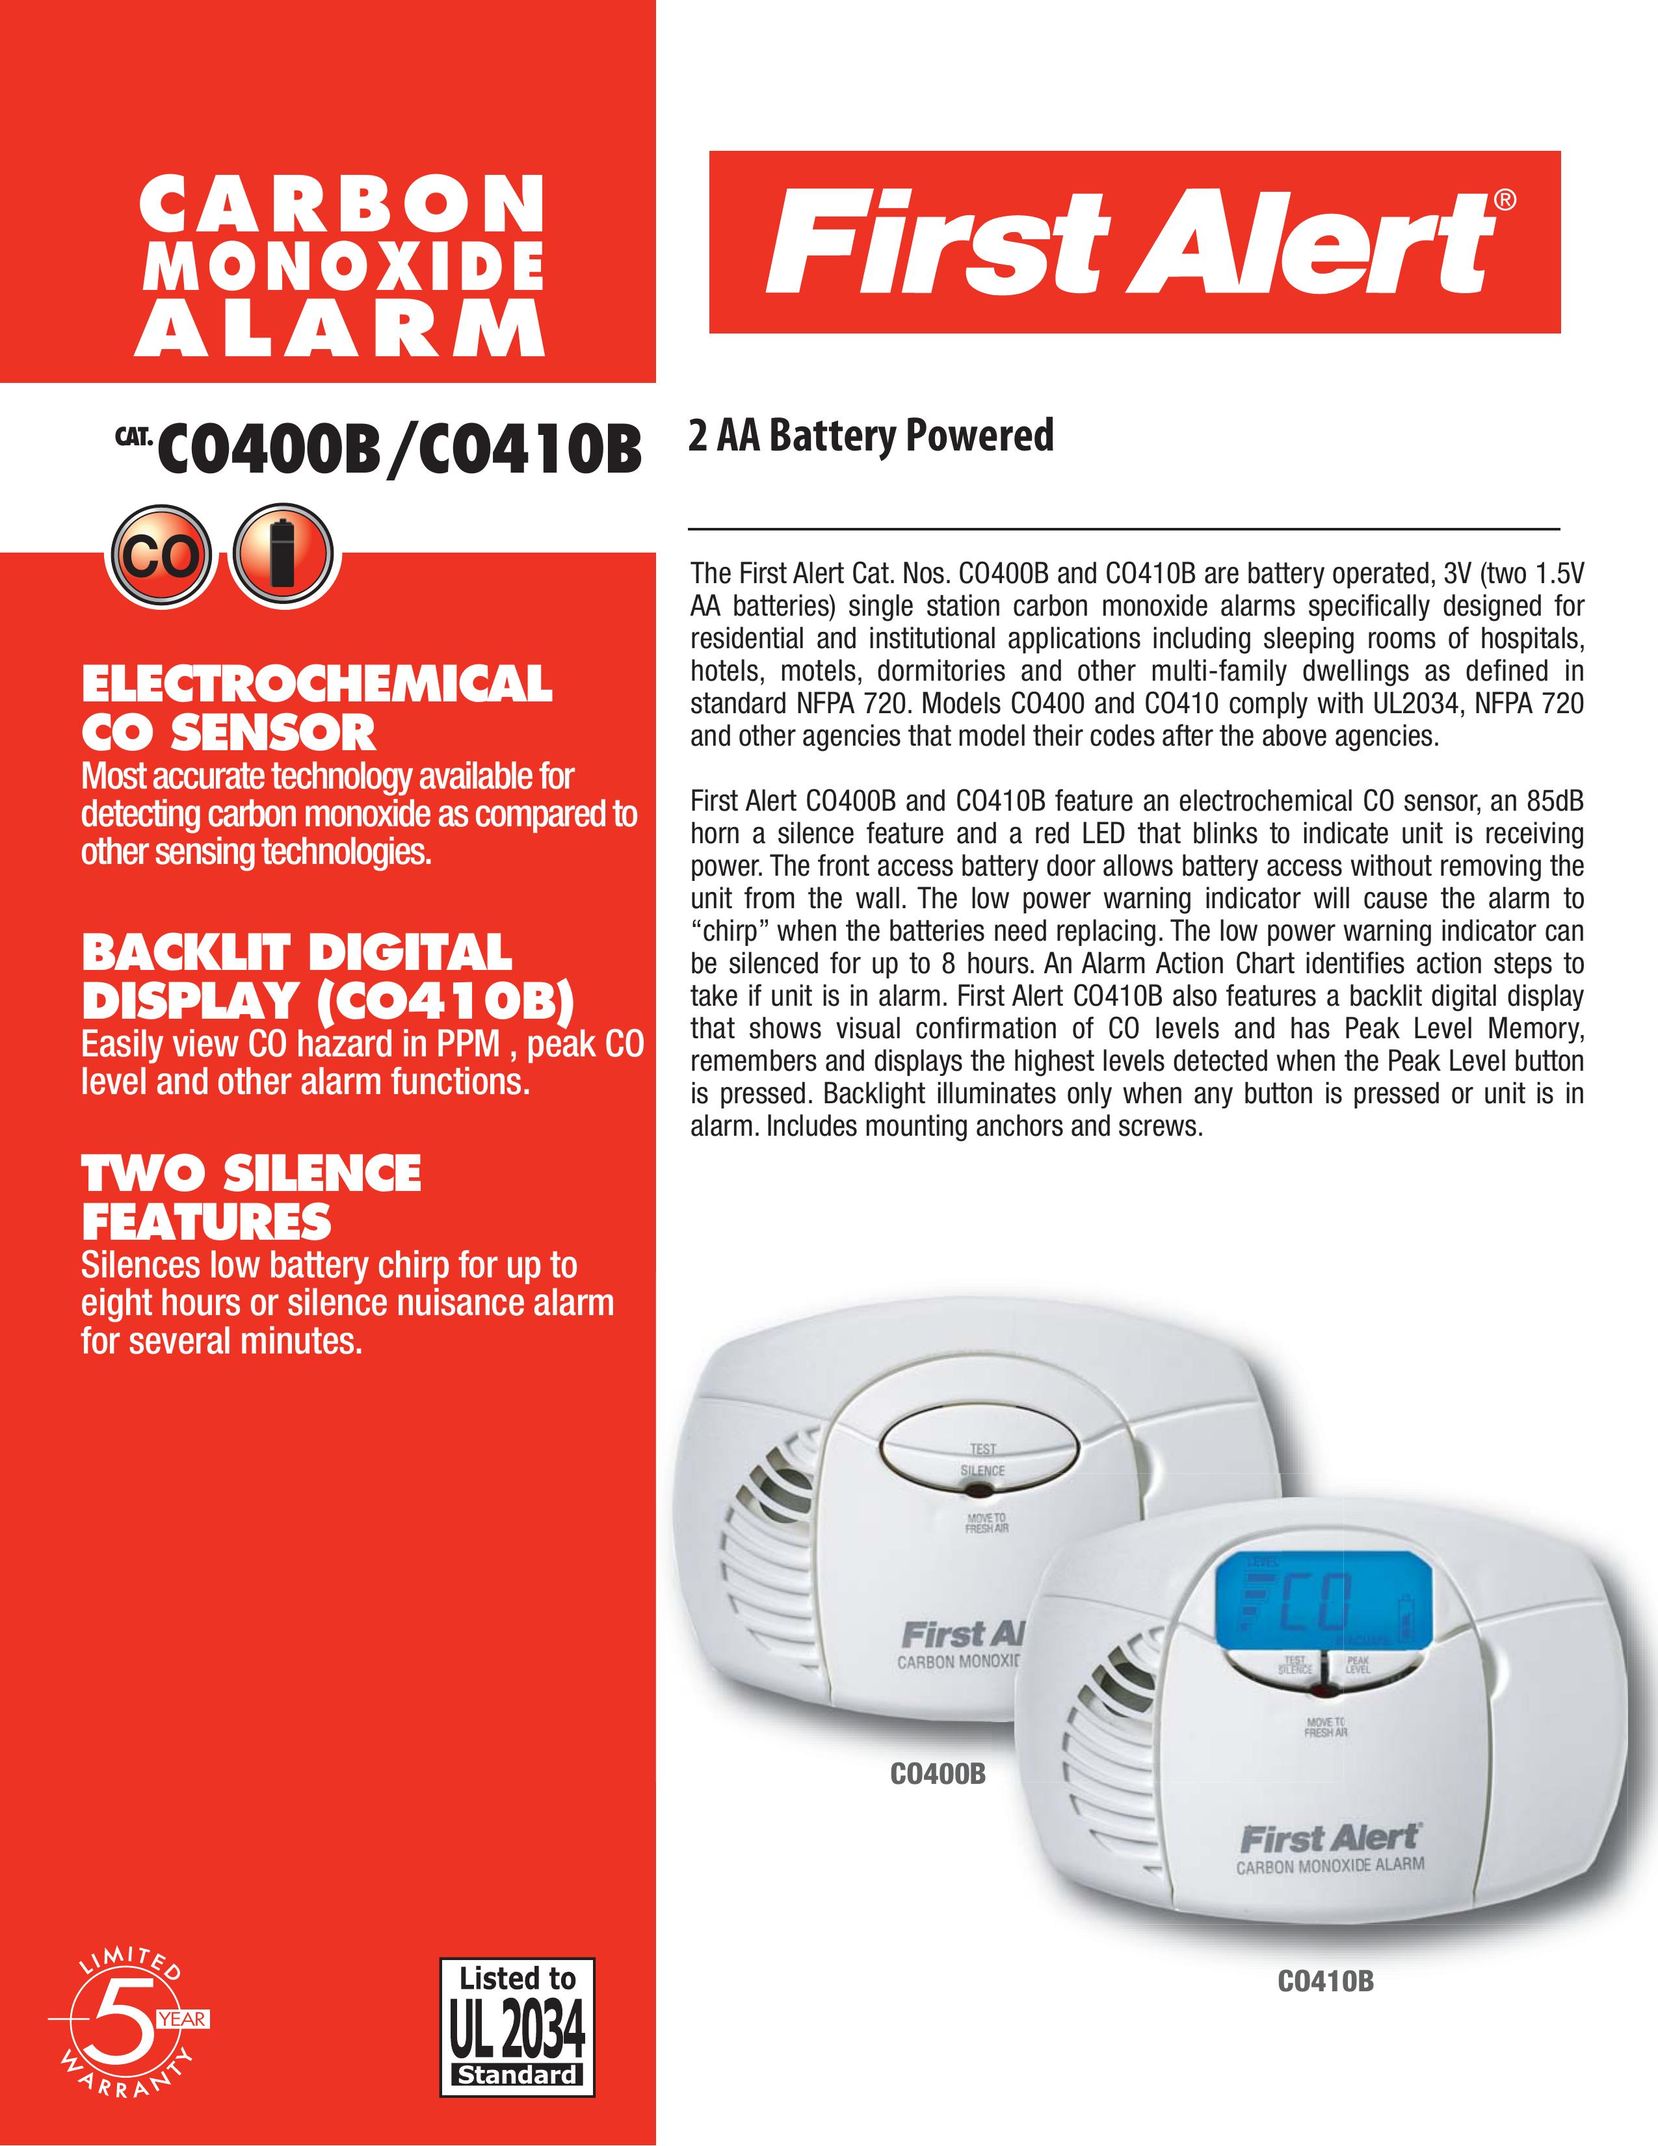 First Alert C0410B Carbon Monoxide Alarm User Manual